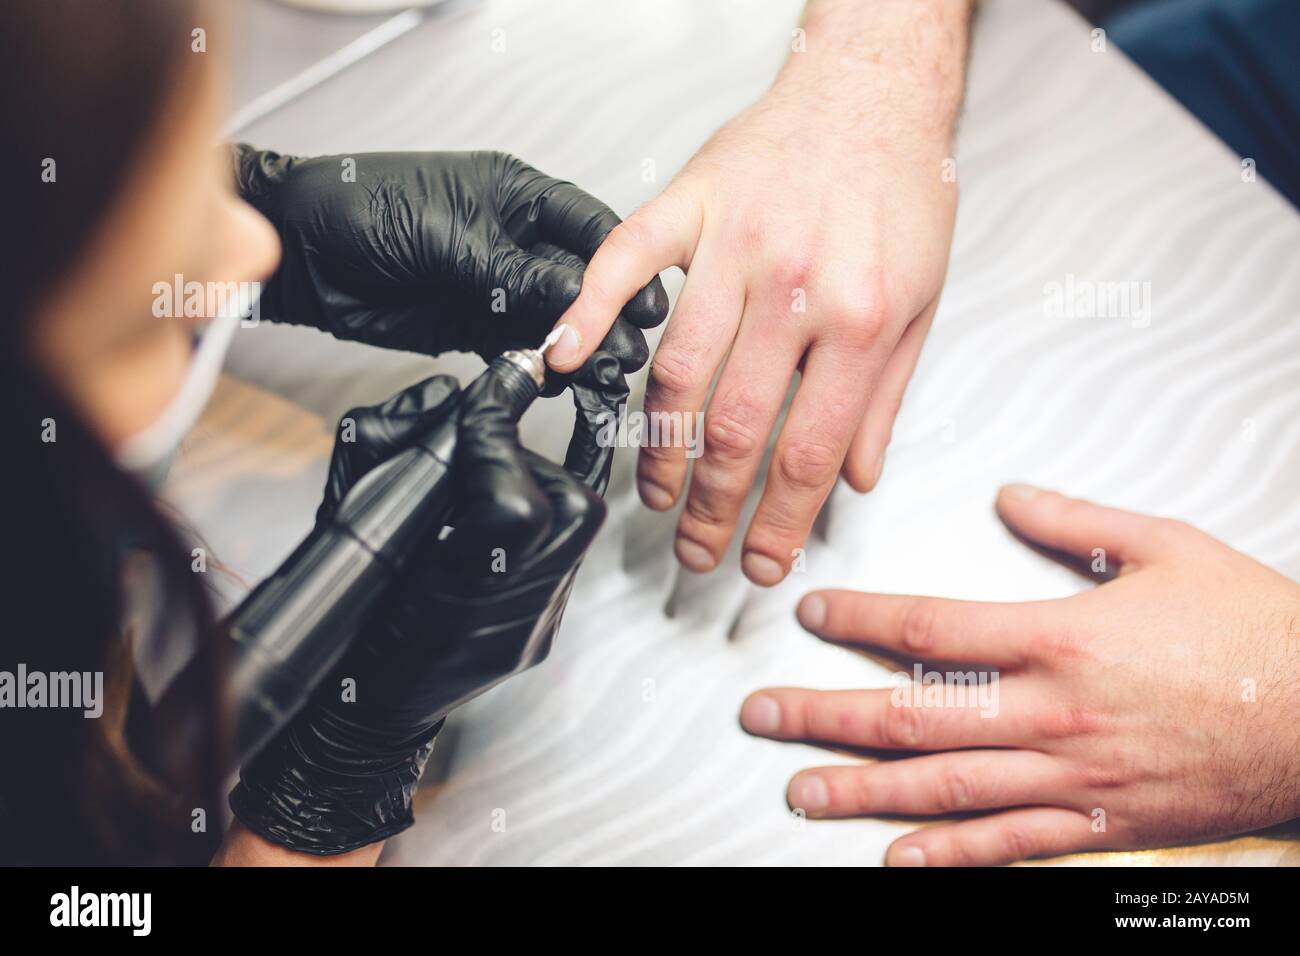 Men S Manicure Professional Manicure For Man By Manicure Machine A Man Receiving A Manicure In